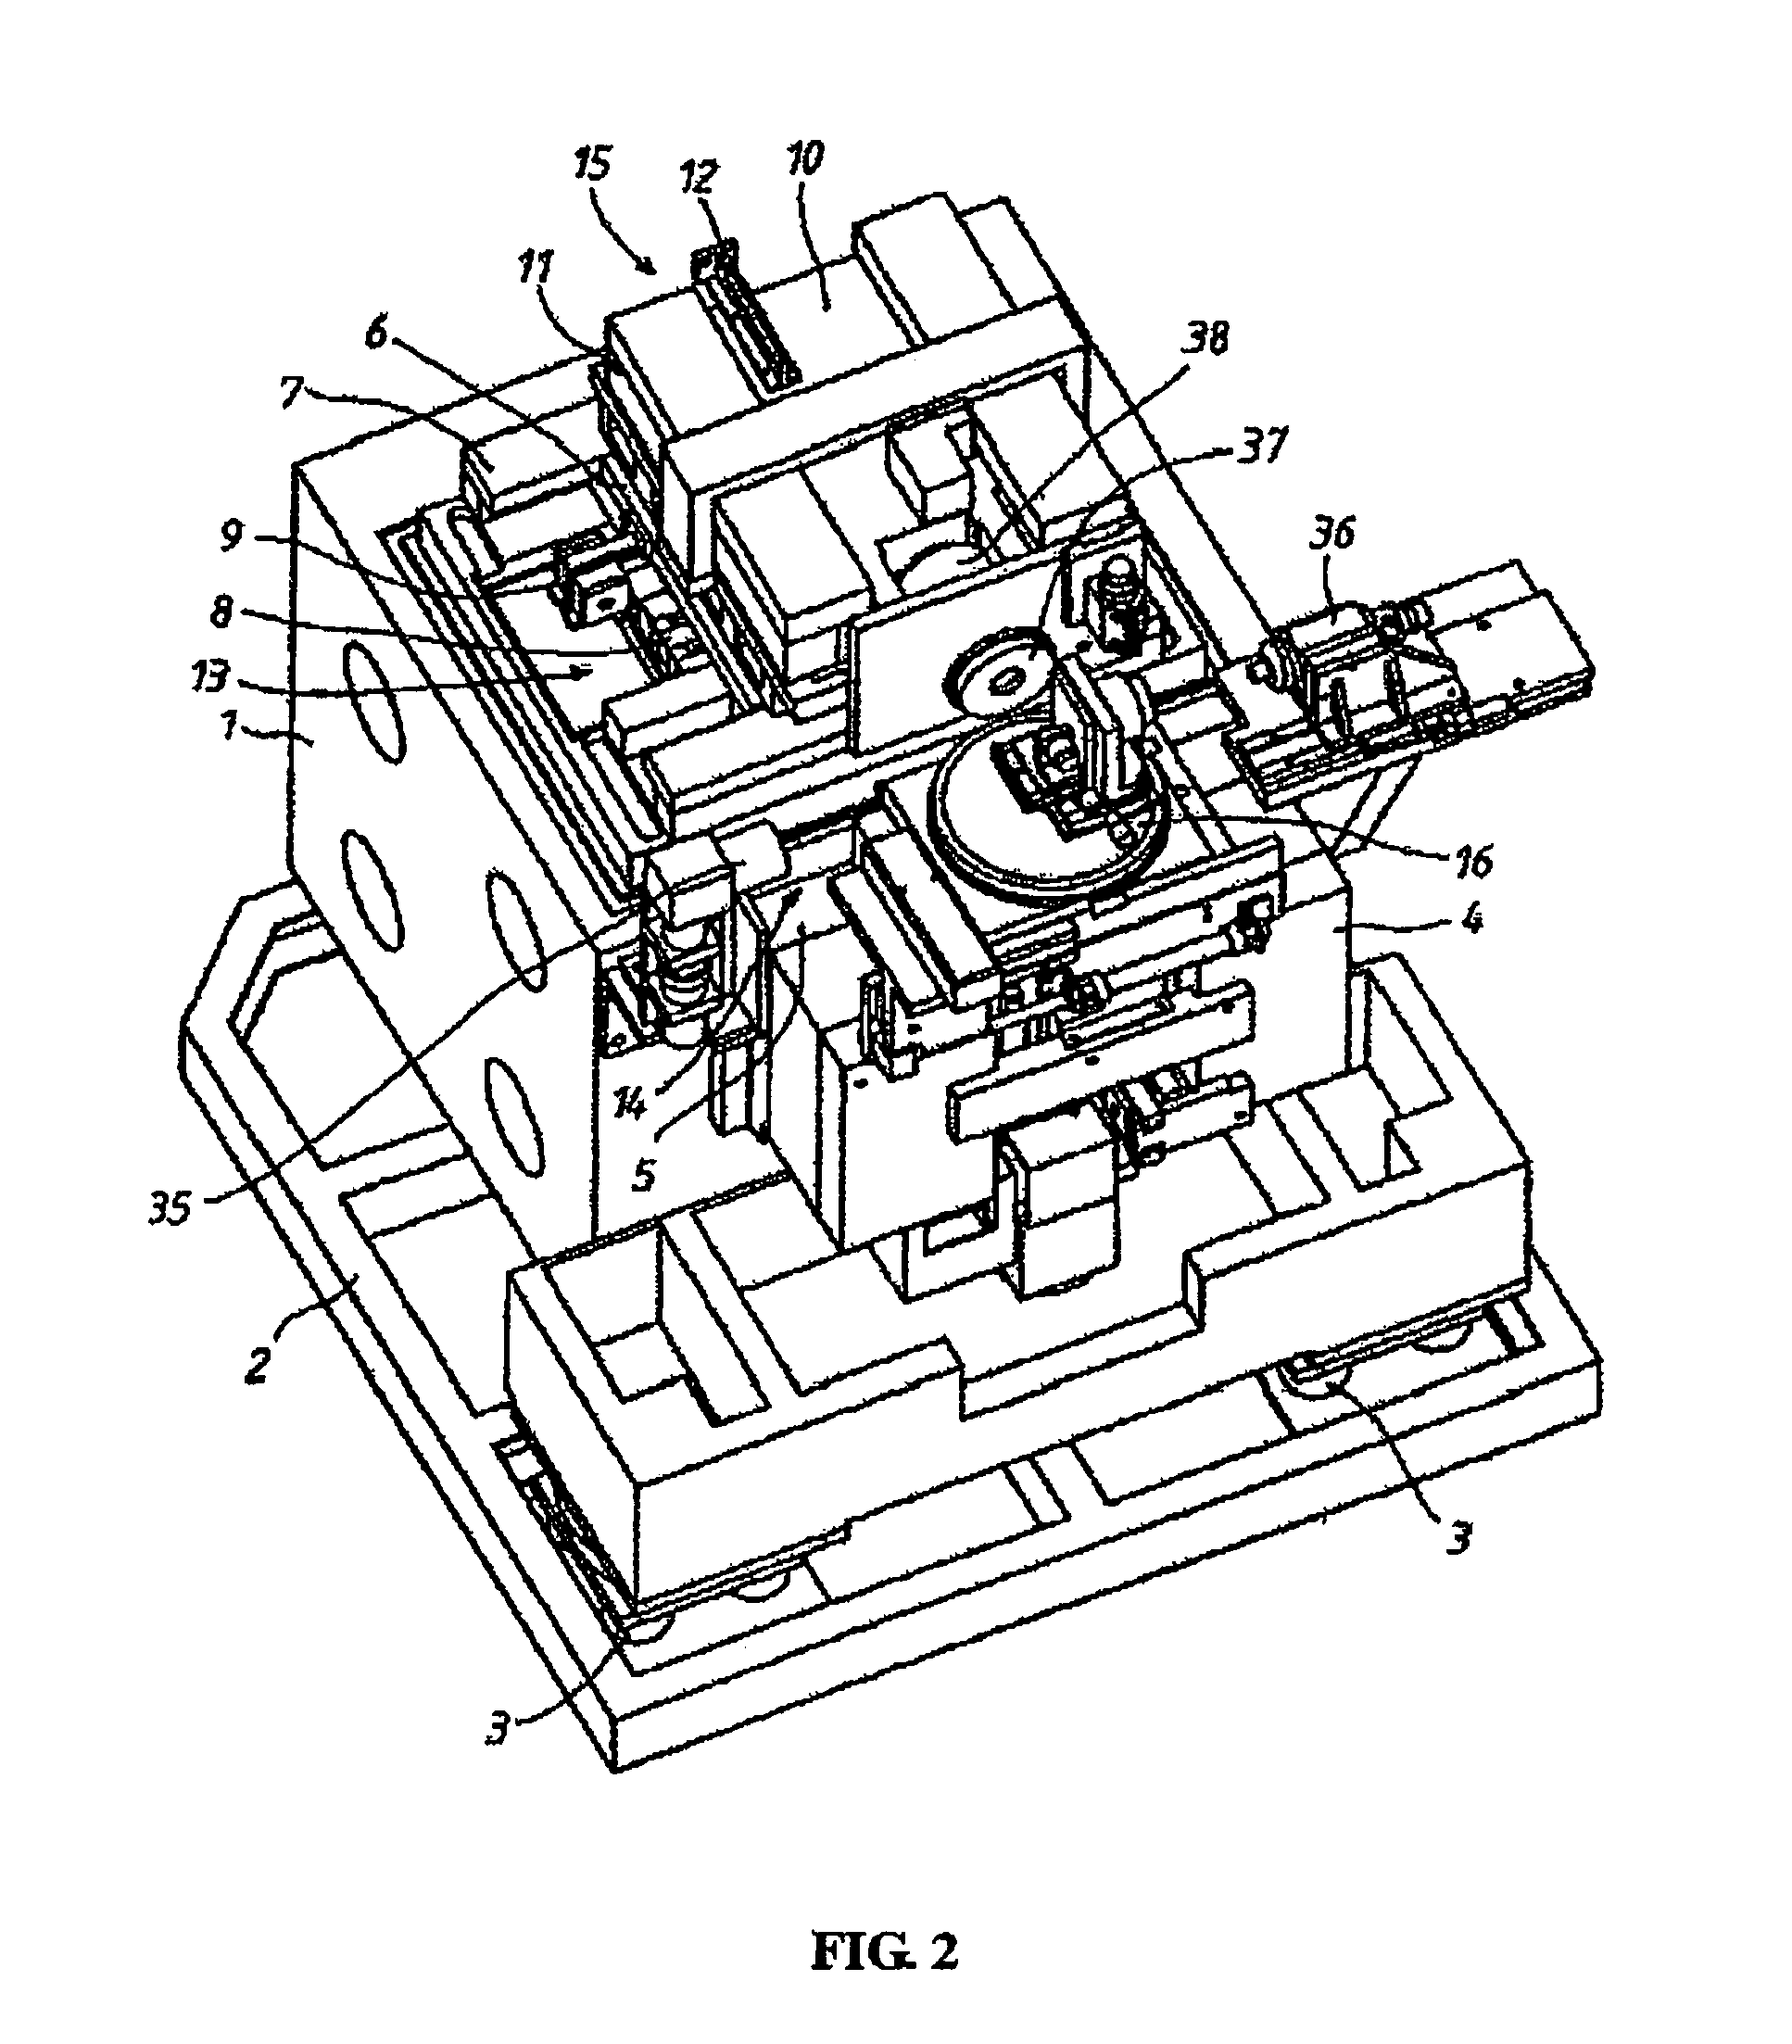 Hale-machining method and apparatus